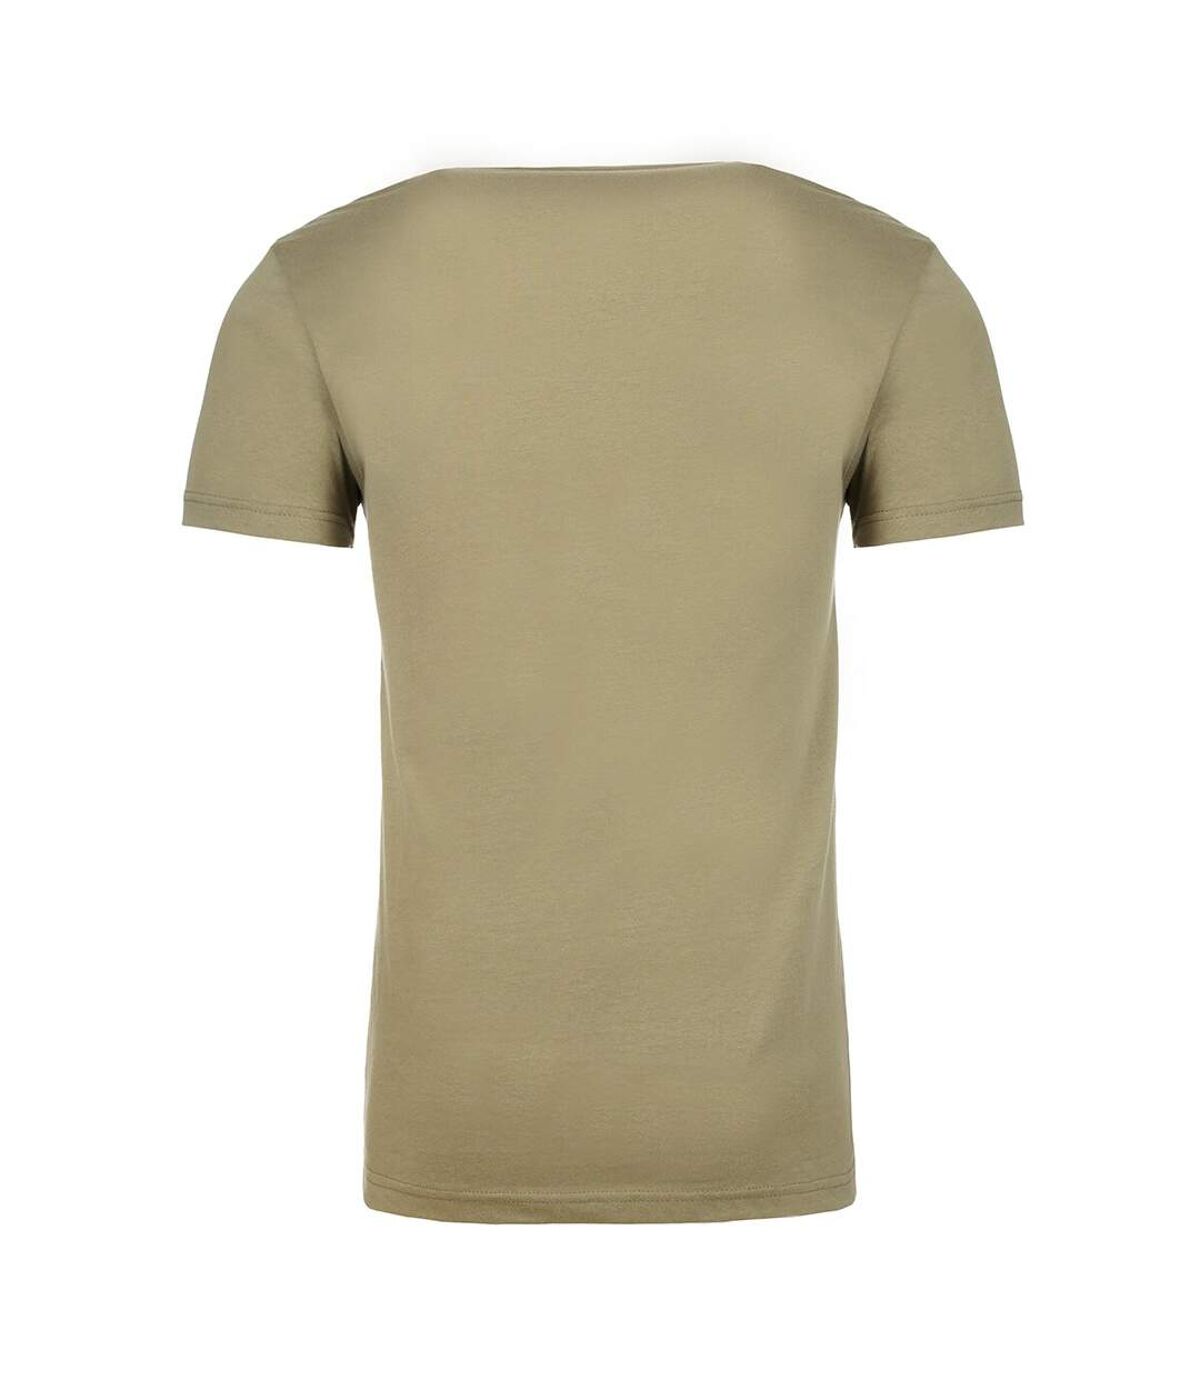 Next Level - T-shirt manches courtes - Unisexe (Olive clair) - UTPC3469